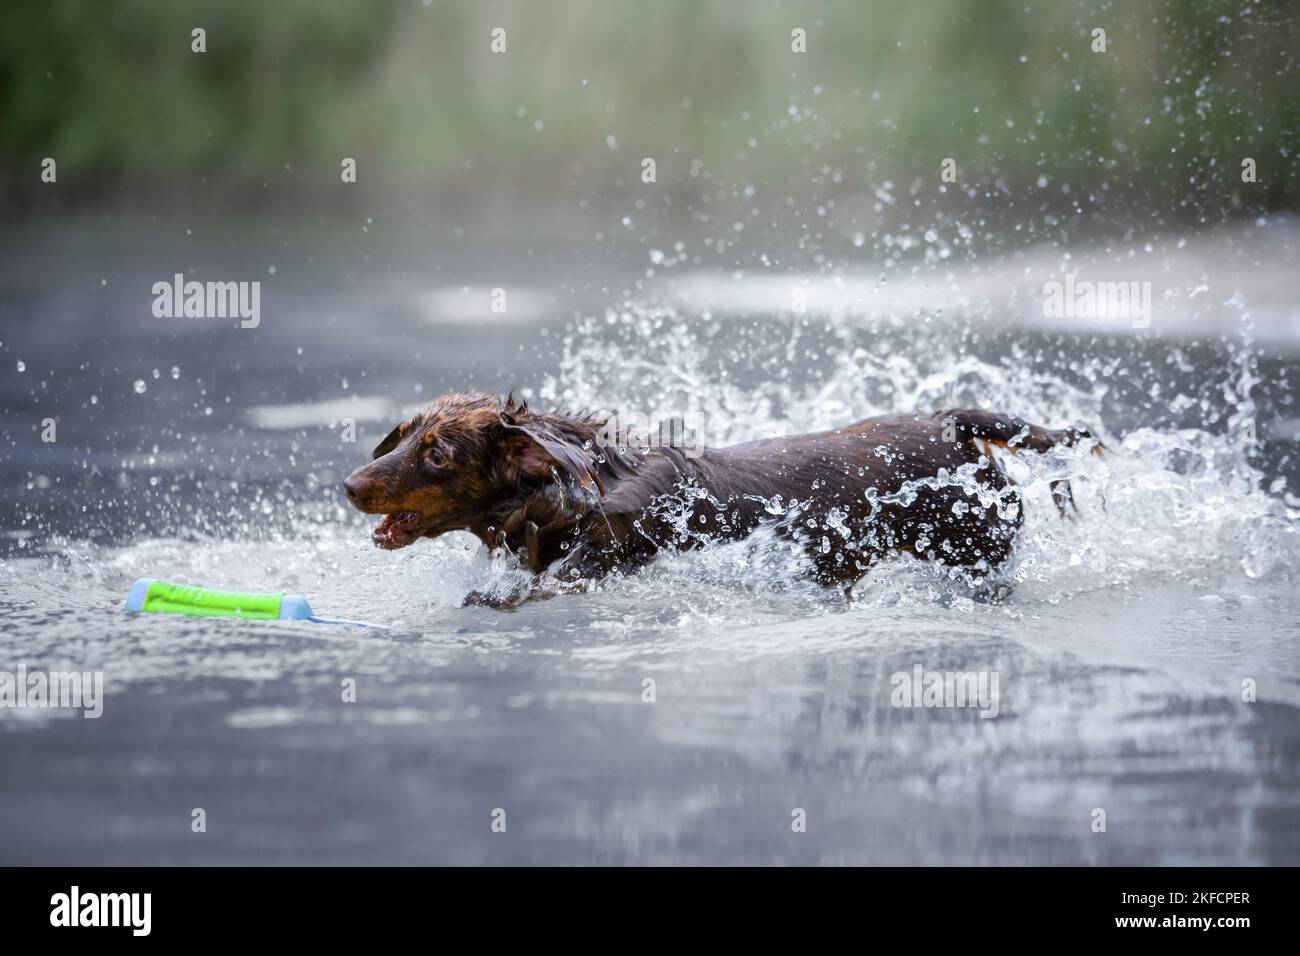 dachshund runs into the water Stock Photo